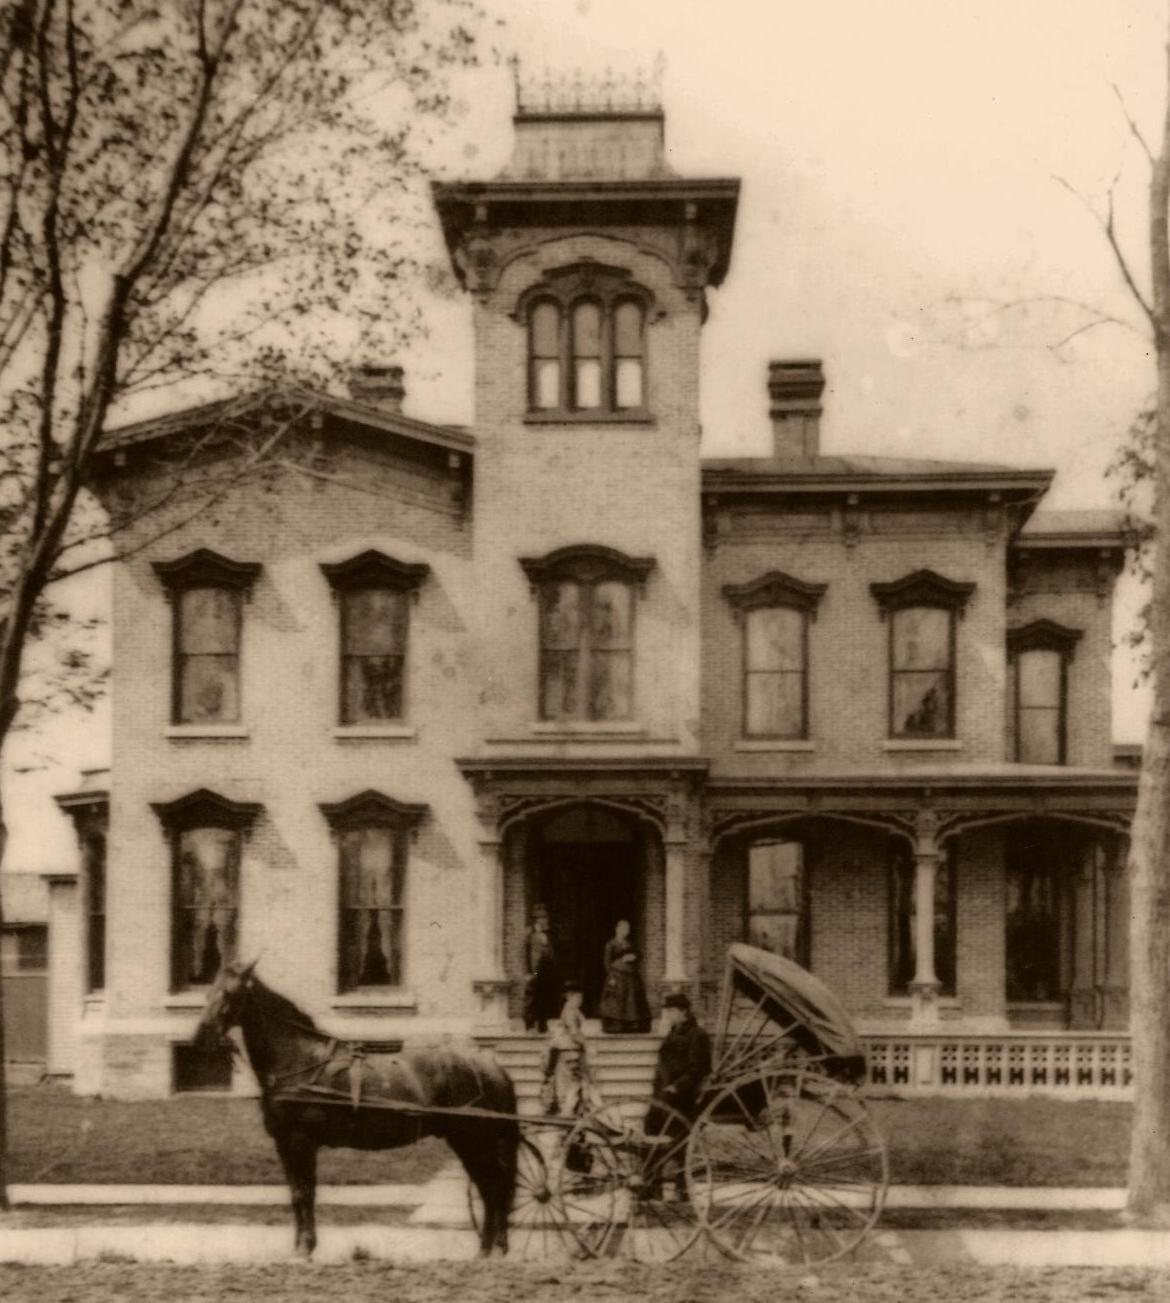 The Farnam mansion in 1880.